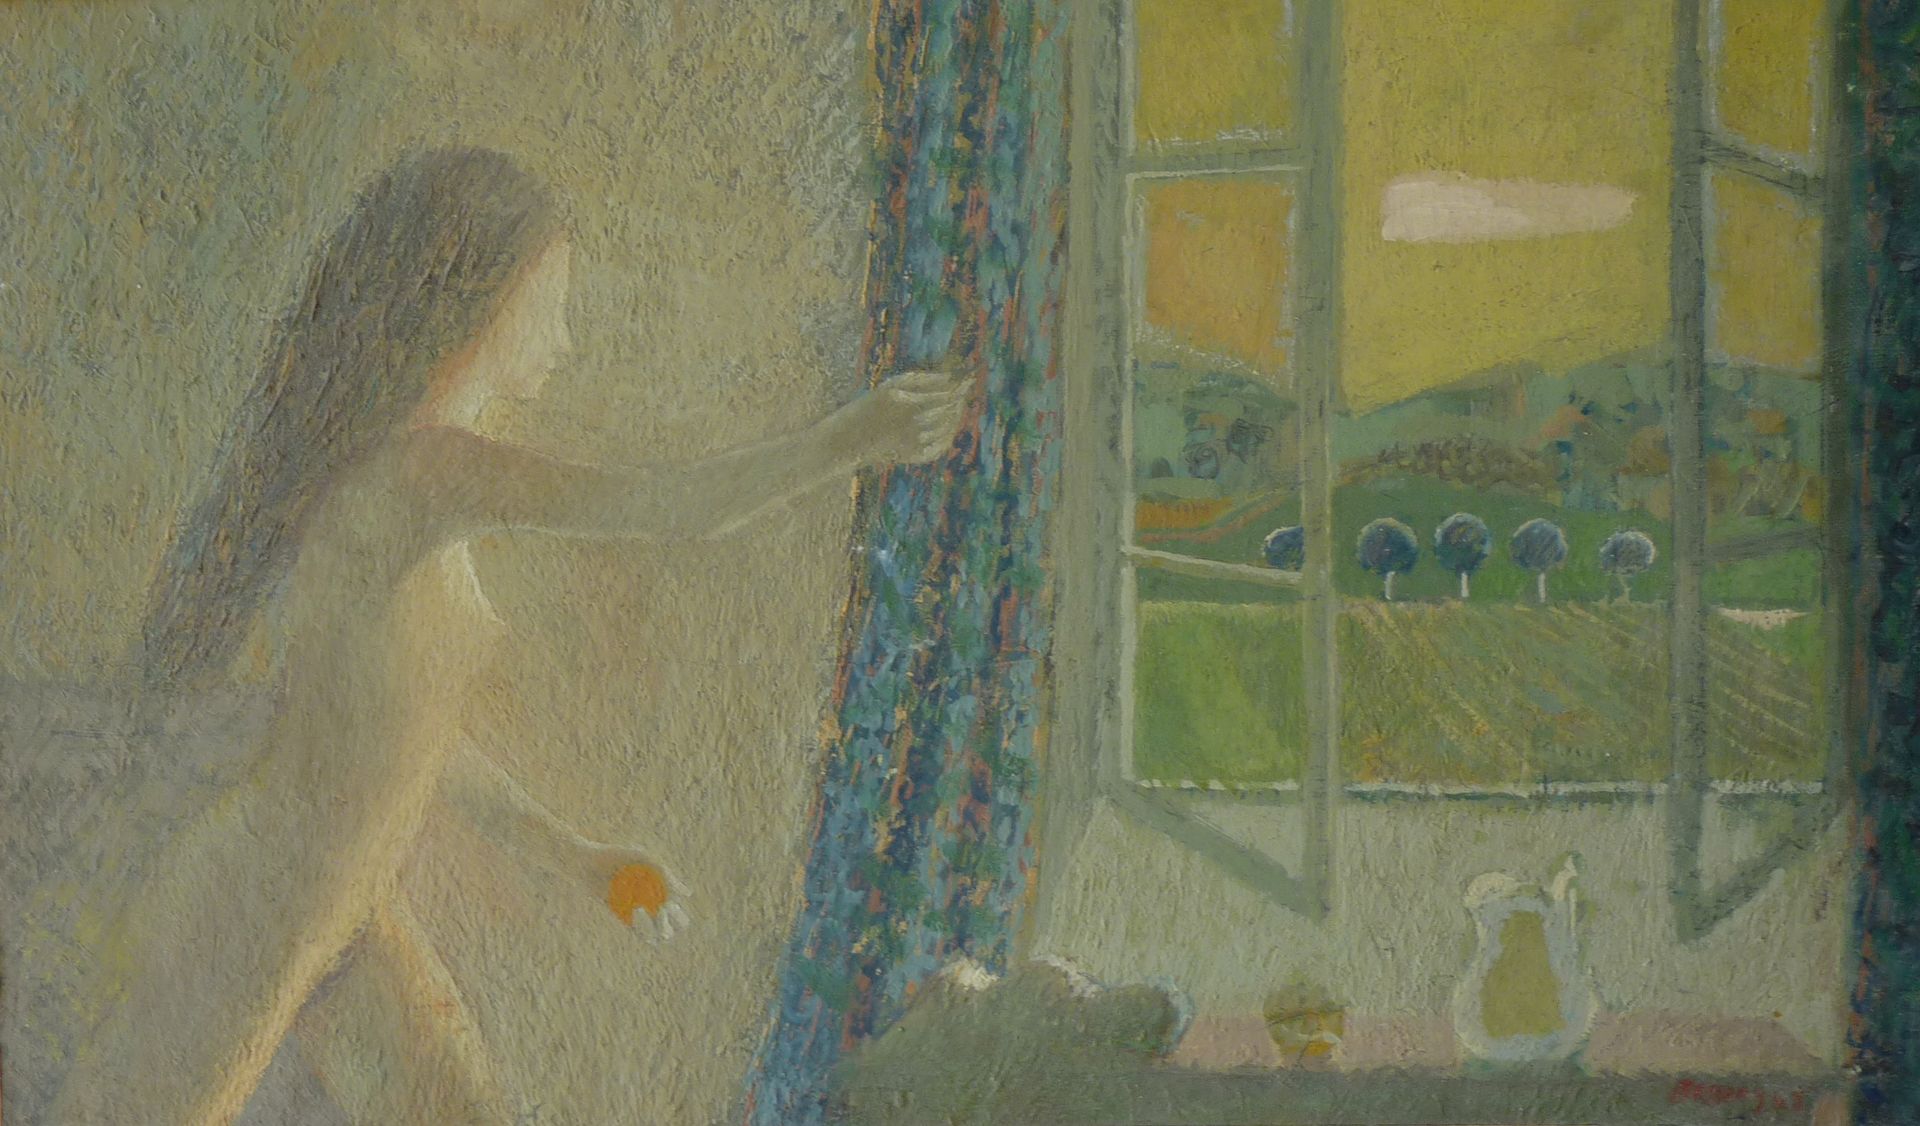 Null 让-克劳德-贝松-吉拉尔 (1938-2021)

无题34》，1965年

布面油画，右下方有签名和日期

33 x 55厘米